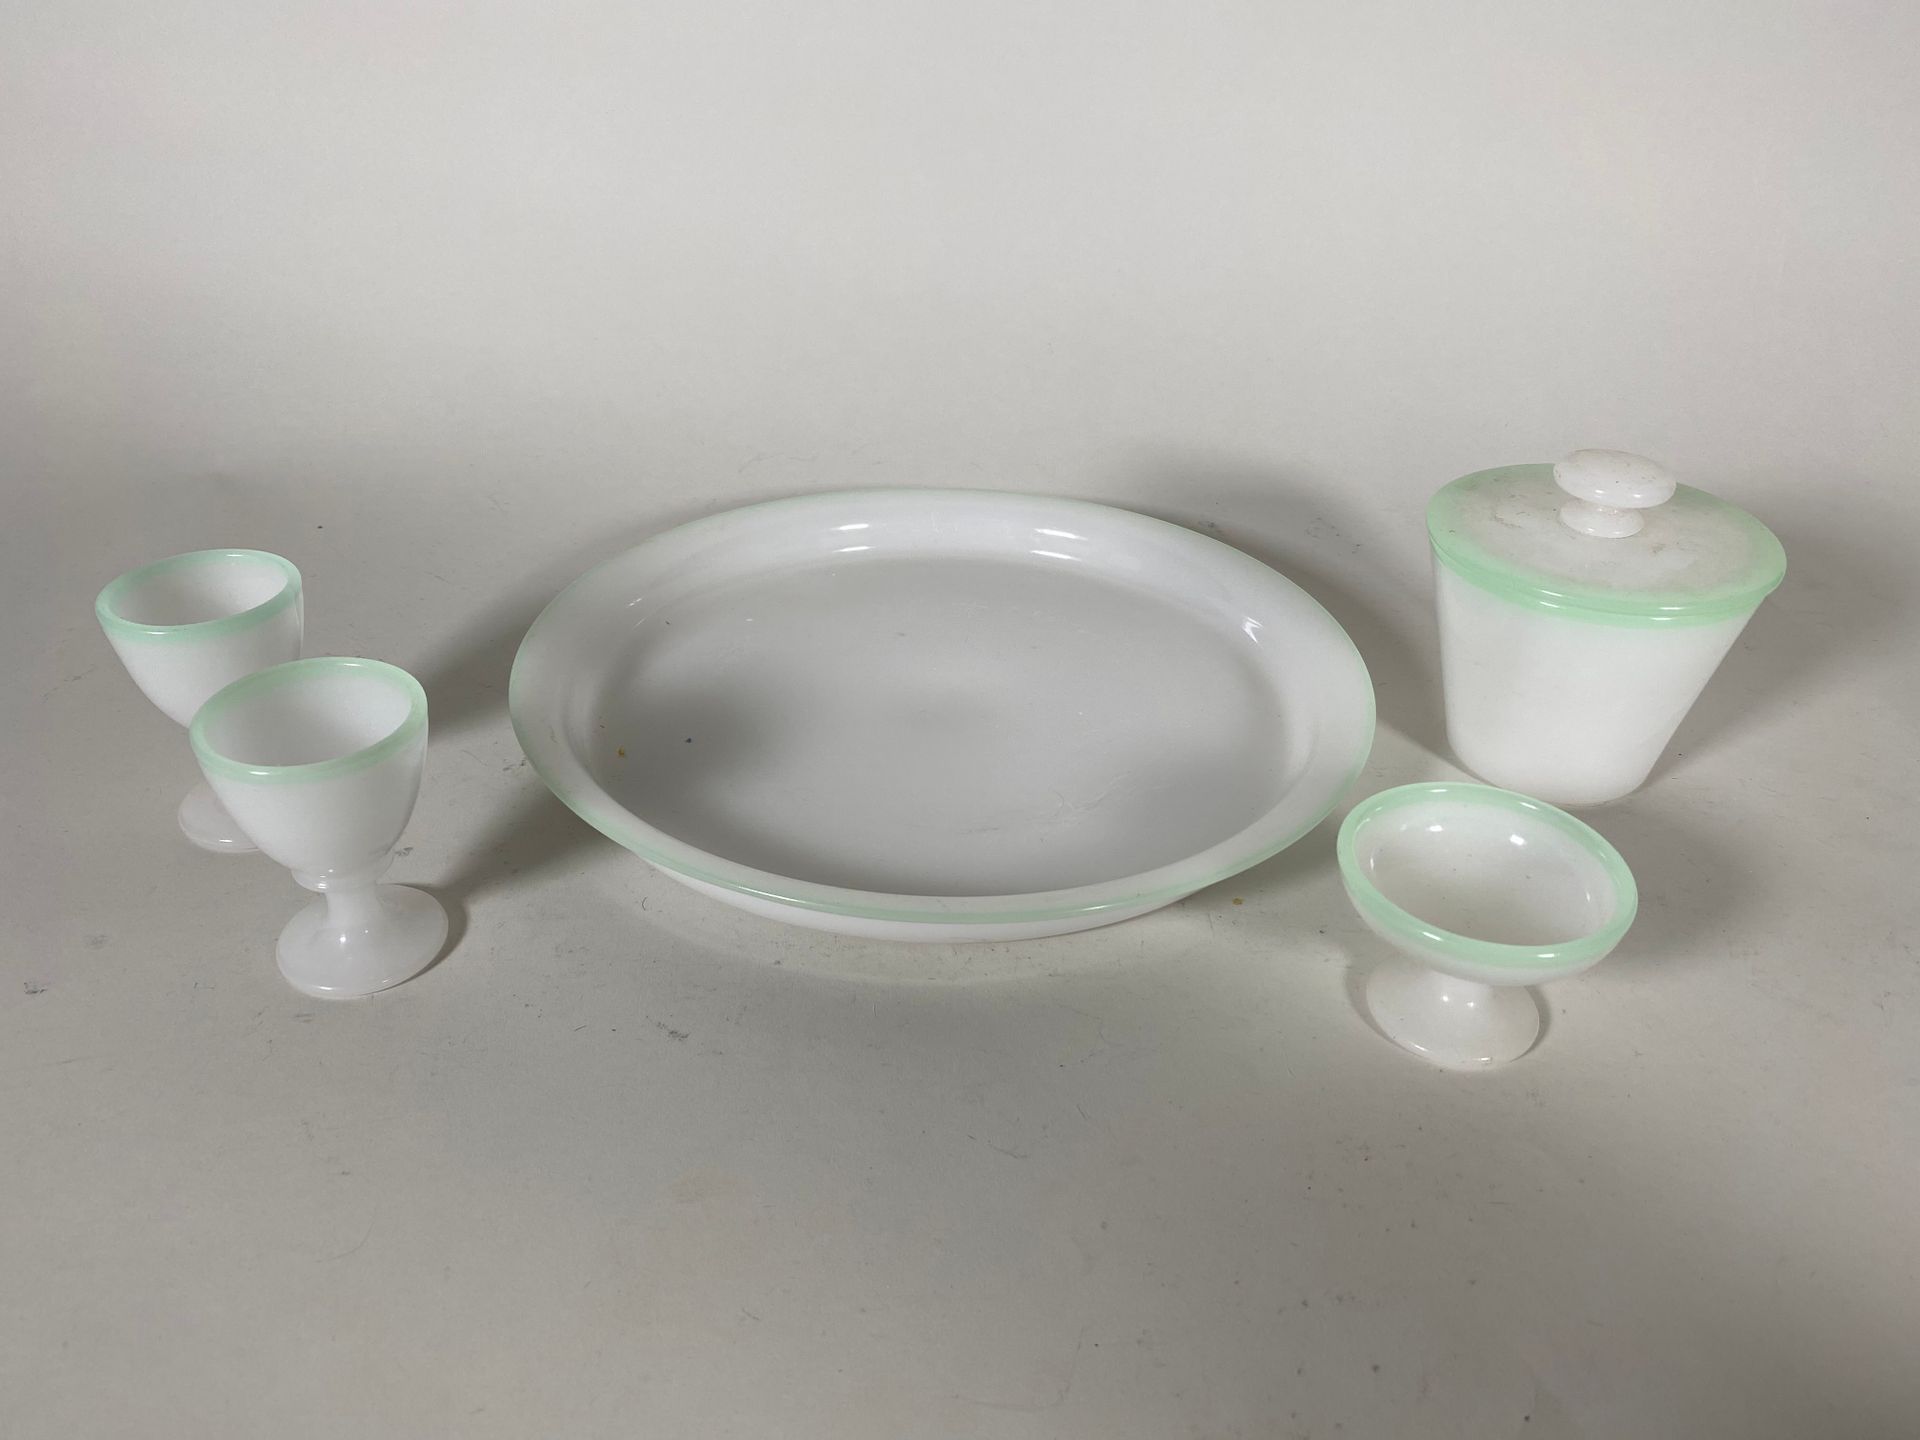 Null 青花玻璃套装包括：一个有盖的糖碗，一个杯脚，两个蛋杯和一个圆形托盘。